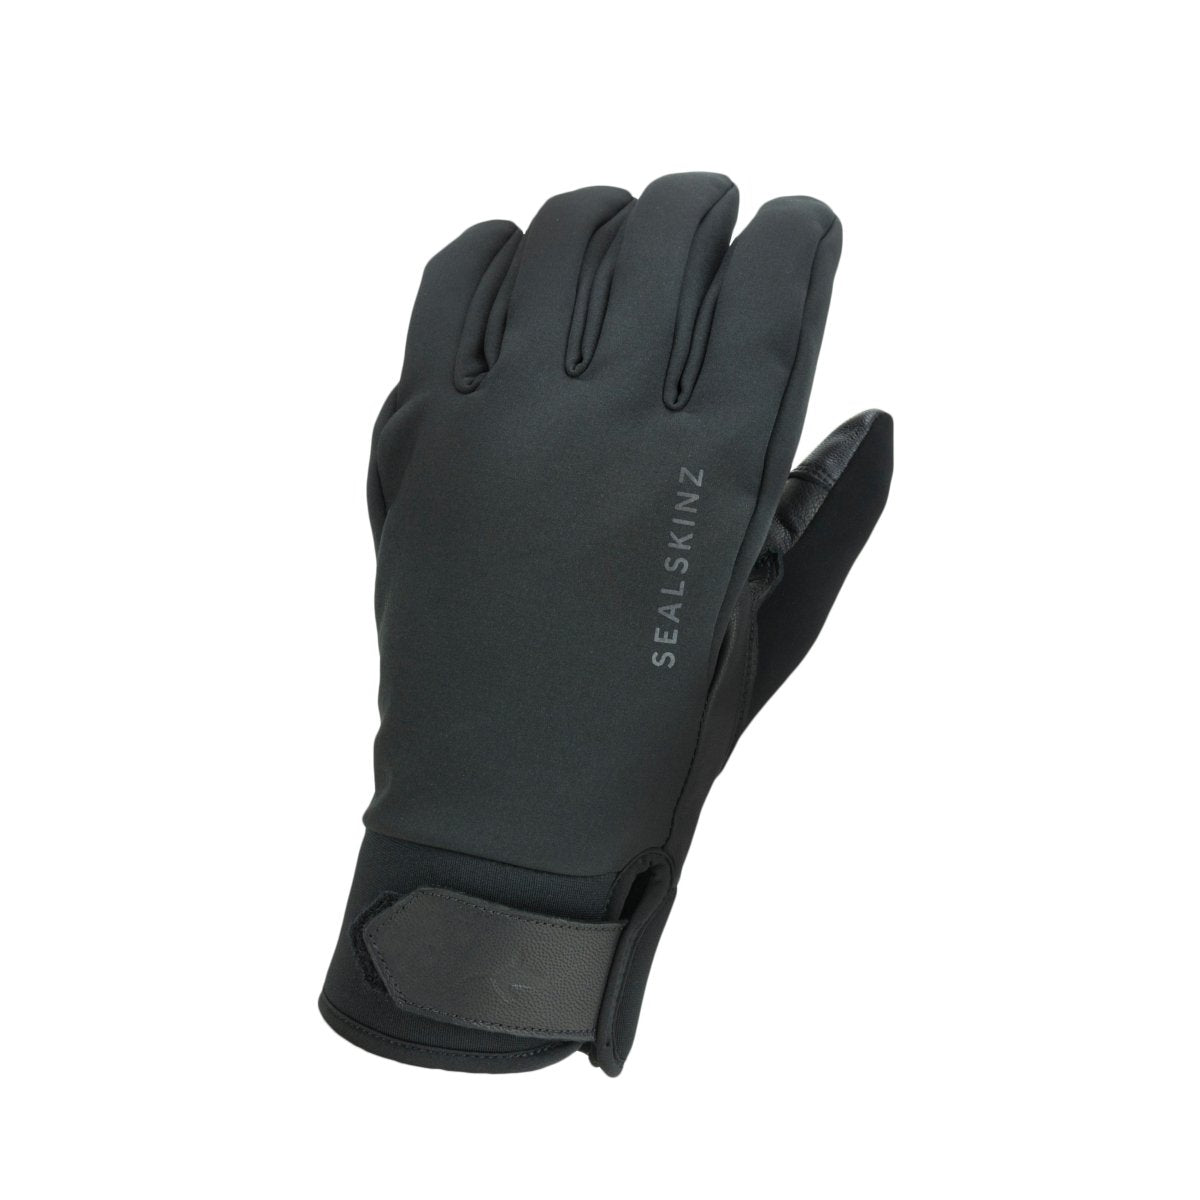 Upwell - Waterproof Heated Cycle Glove